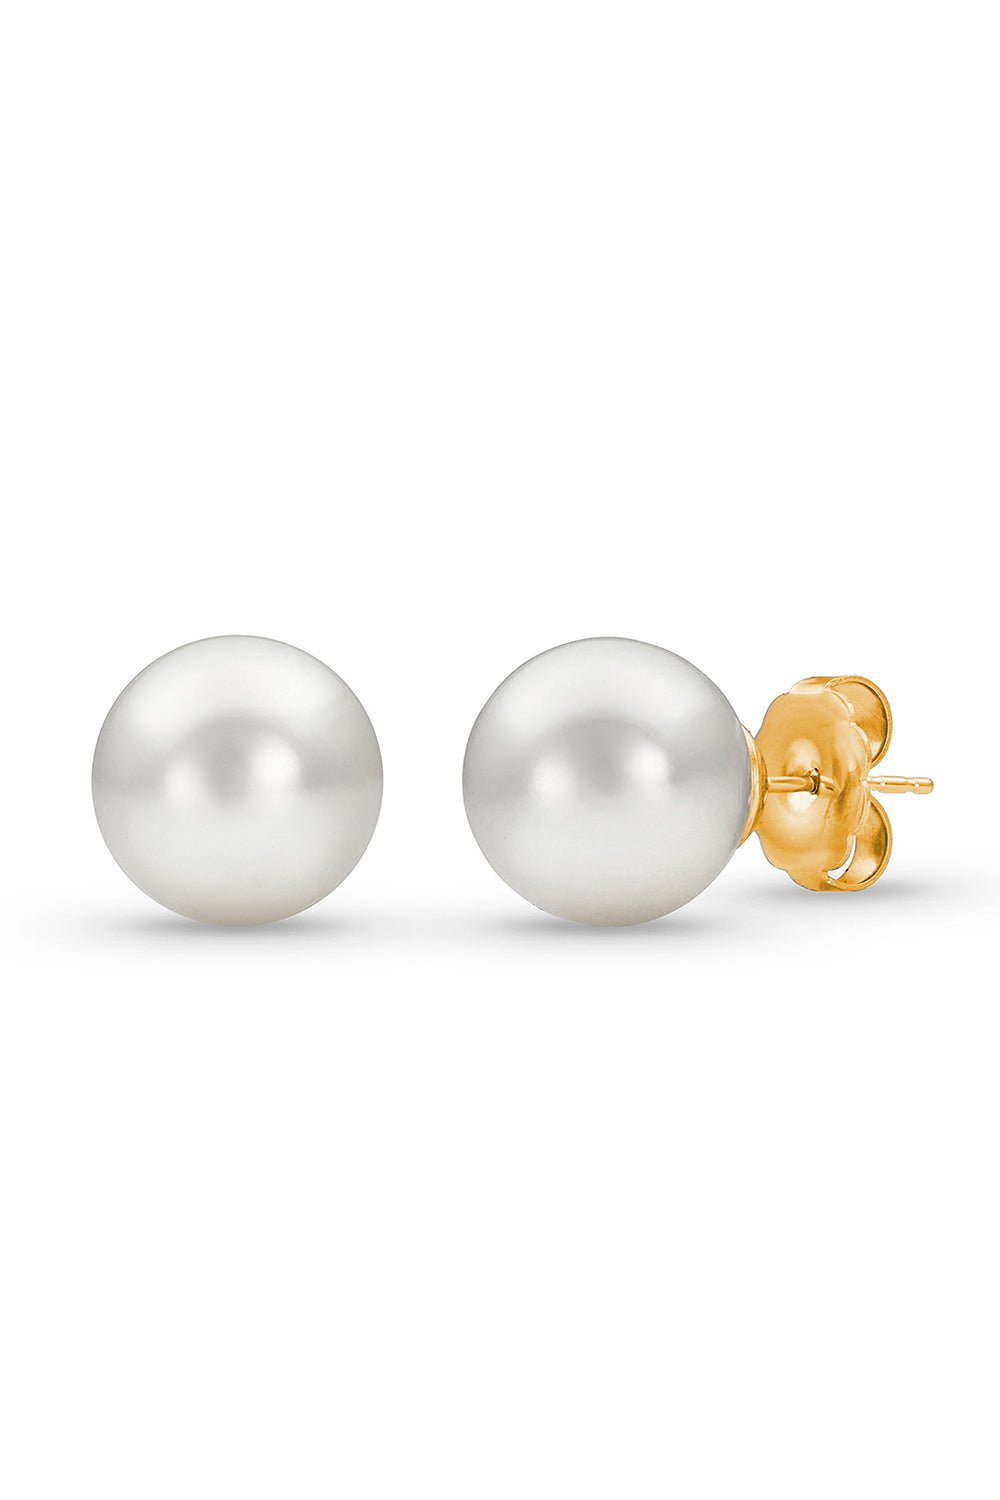 BAGGINS-Akoya Pearl Stud Earrings - 11mm-YELLOW GOLD